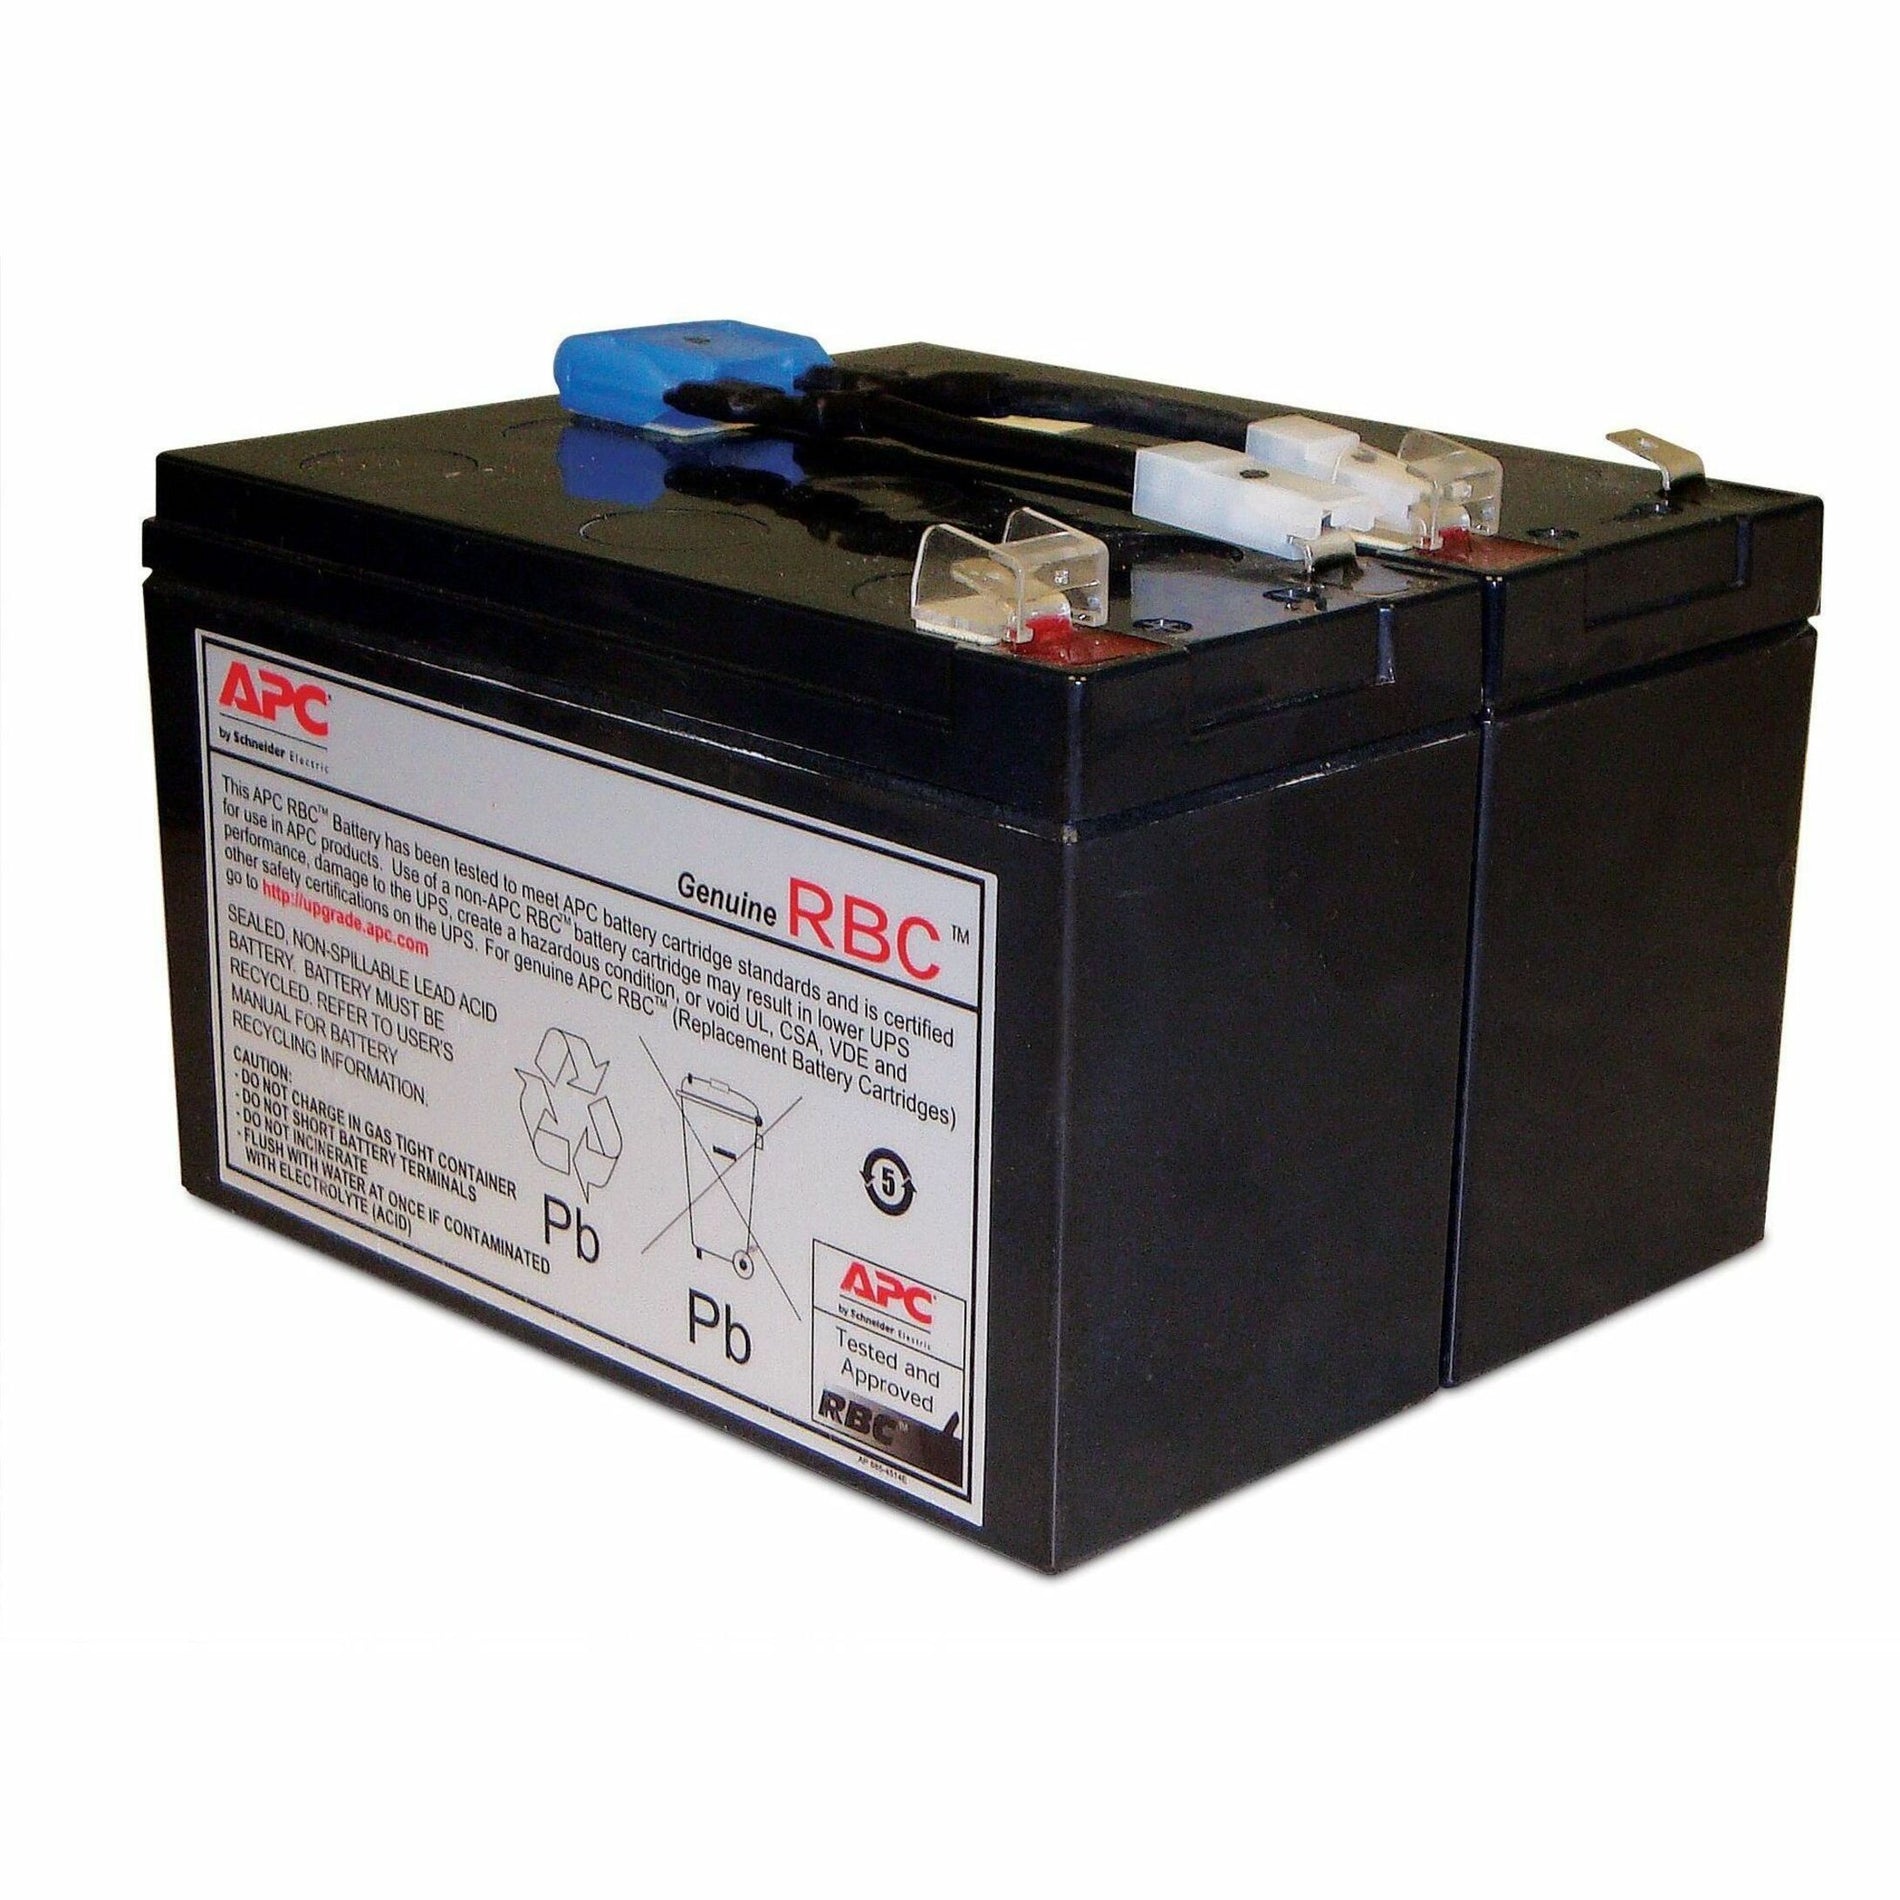 APC APCRBC142 Replacement Battery Cartridge #142, 2 Year Warranty, 216 VAh, 24 V DC